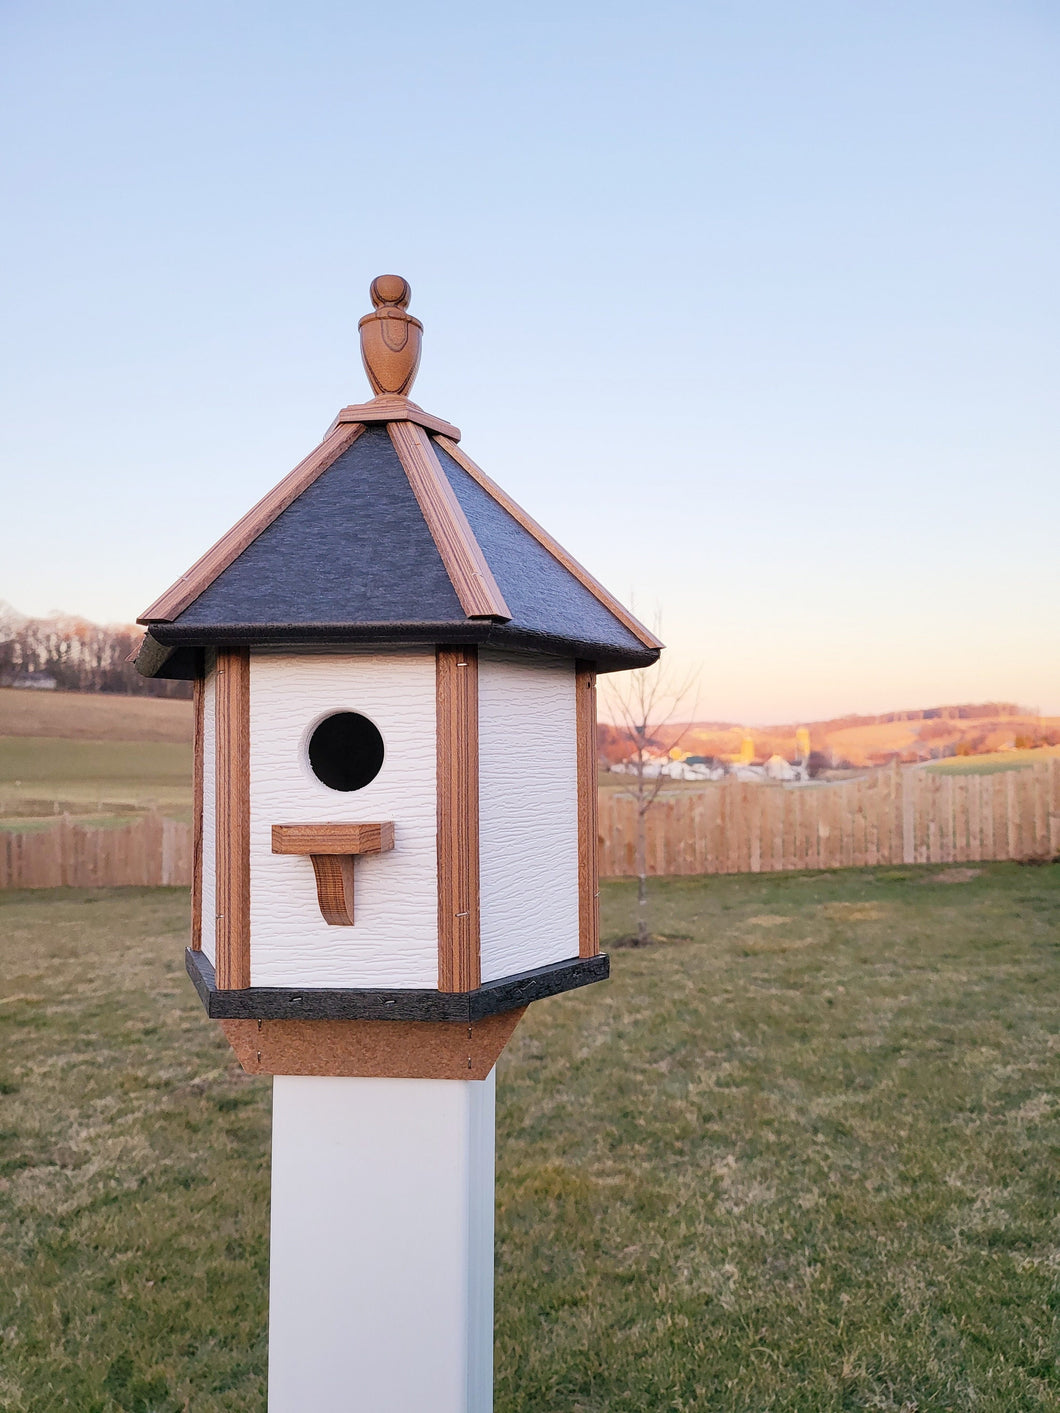 Poly Birdhouse Amish Handcrafted, 1 Hole Bird House